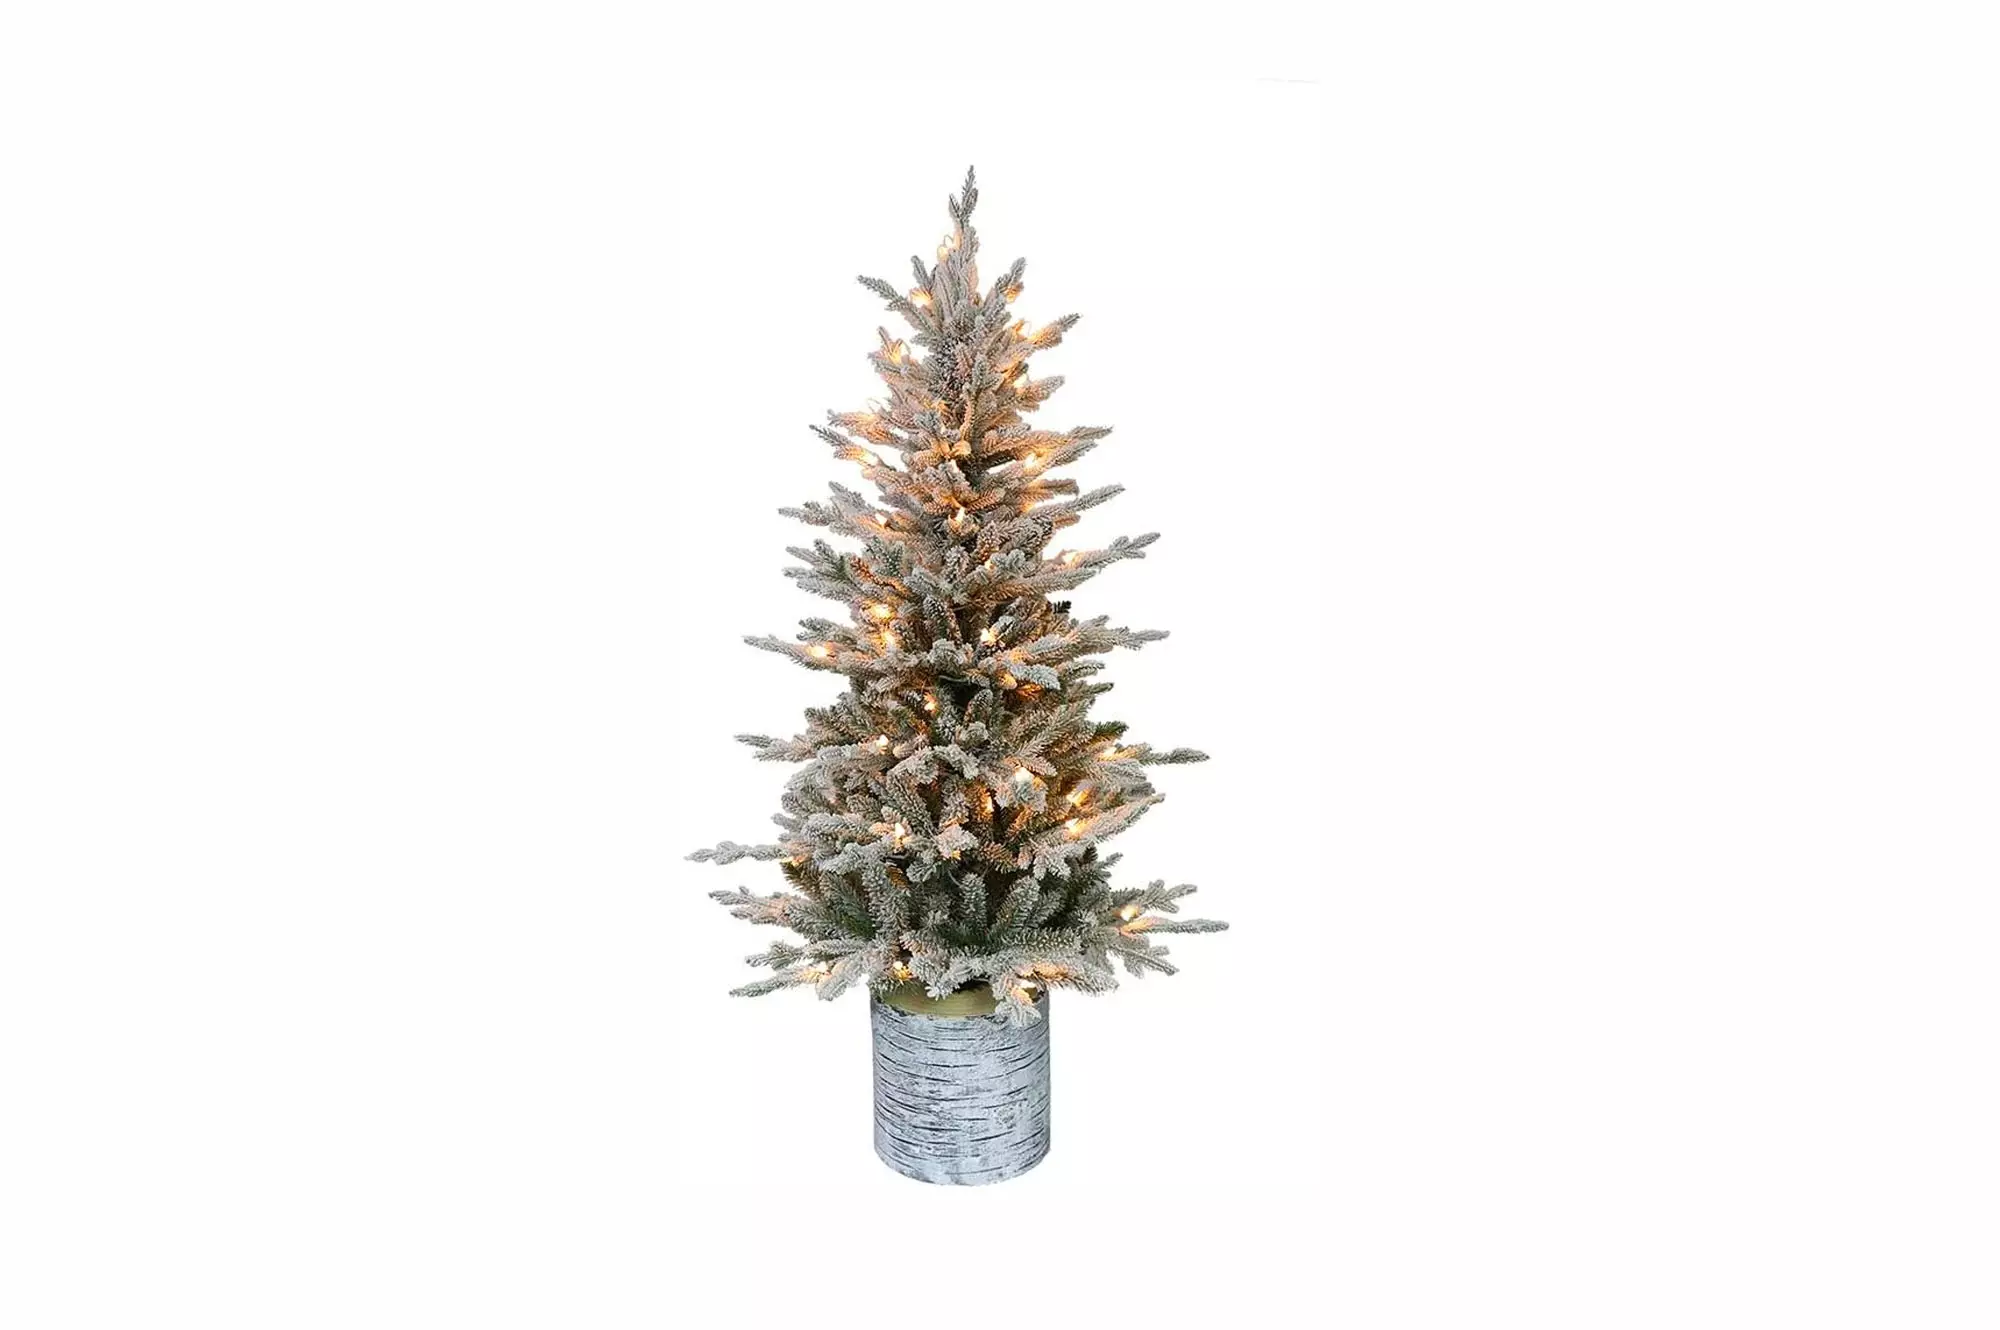 A small artificial Christmas tree.